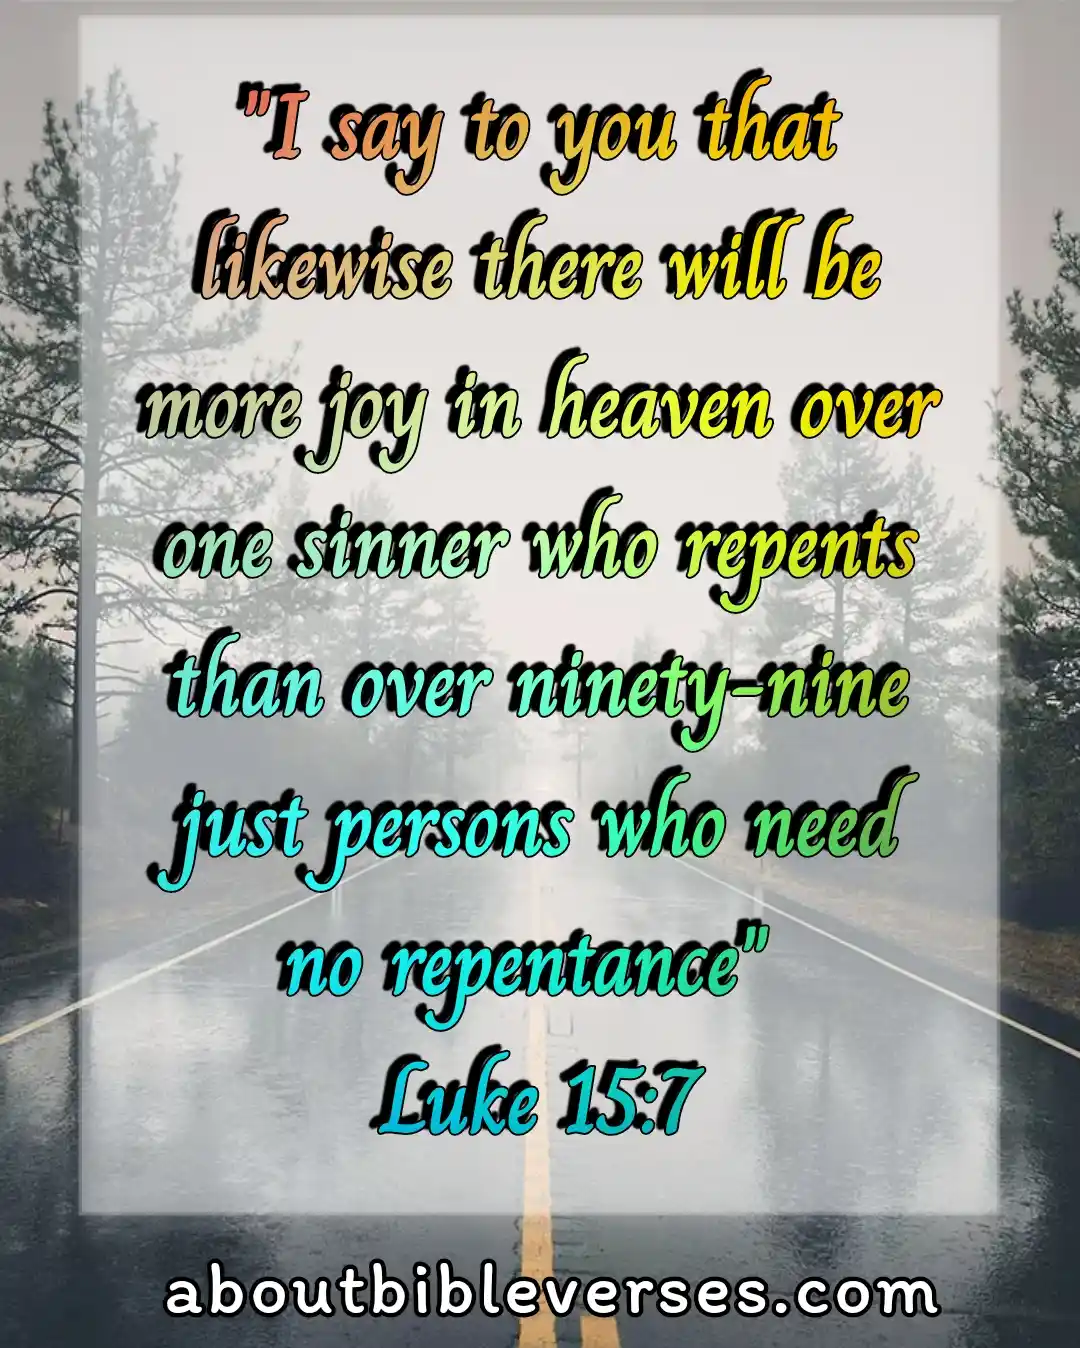 bible verses about repentance (Luke 15:7)